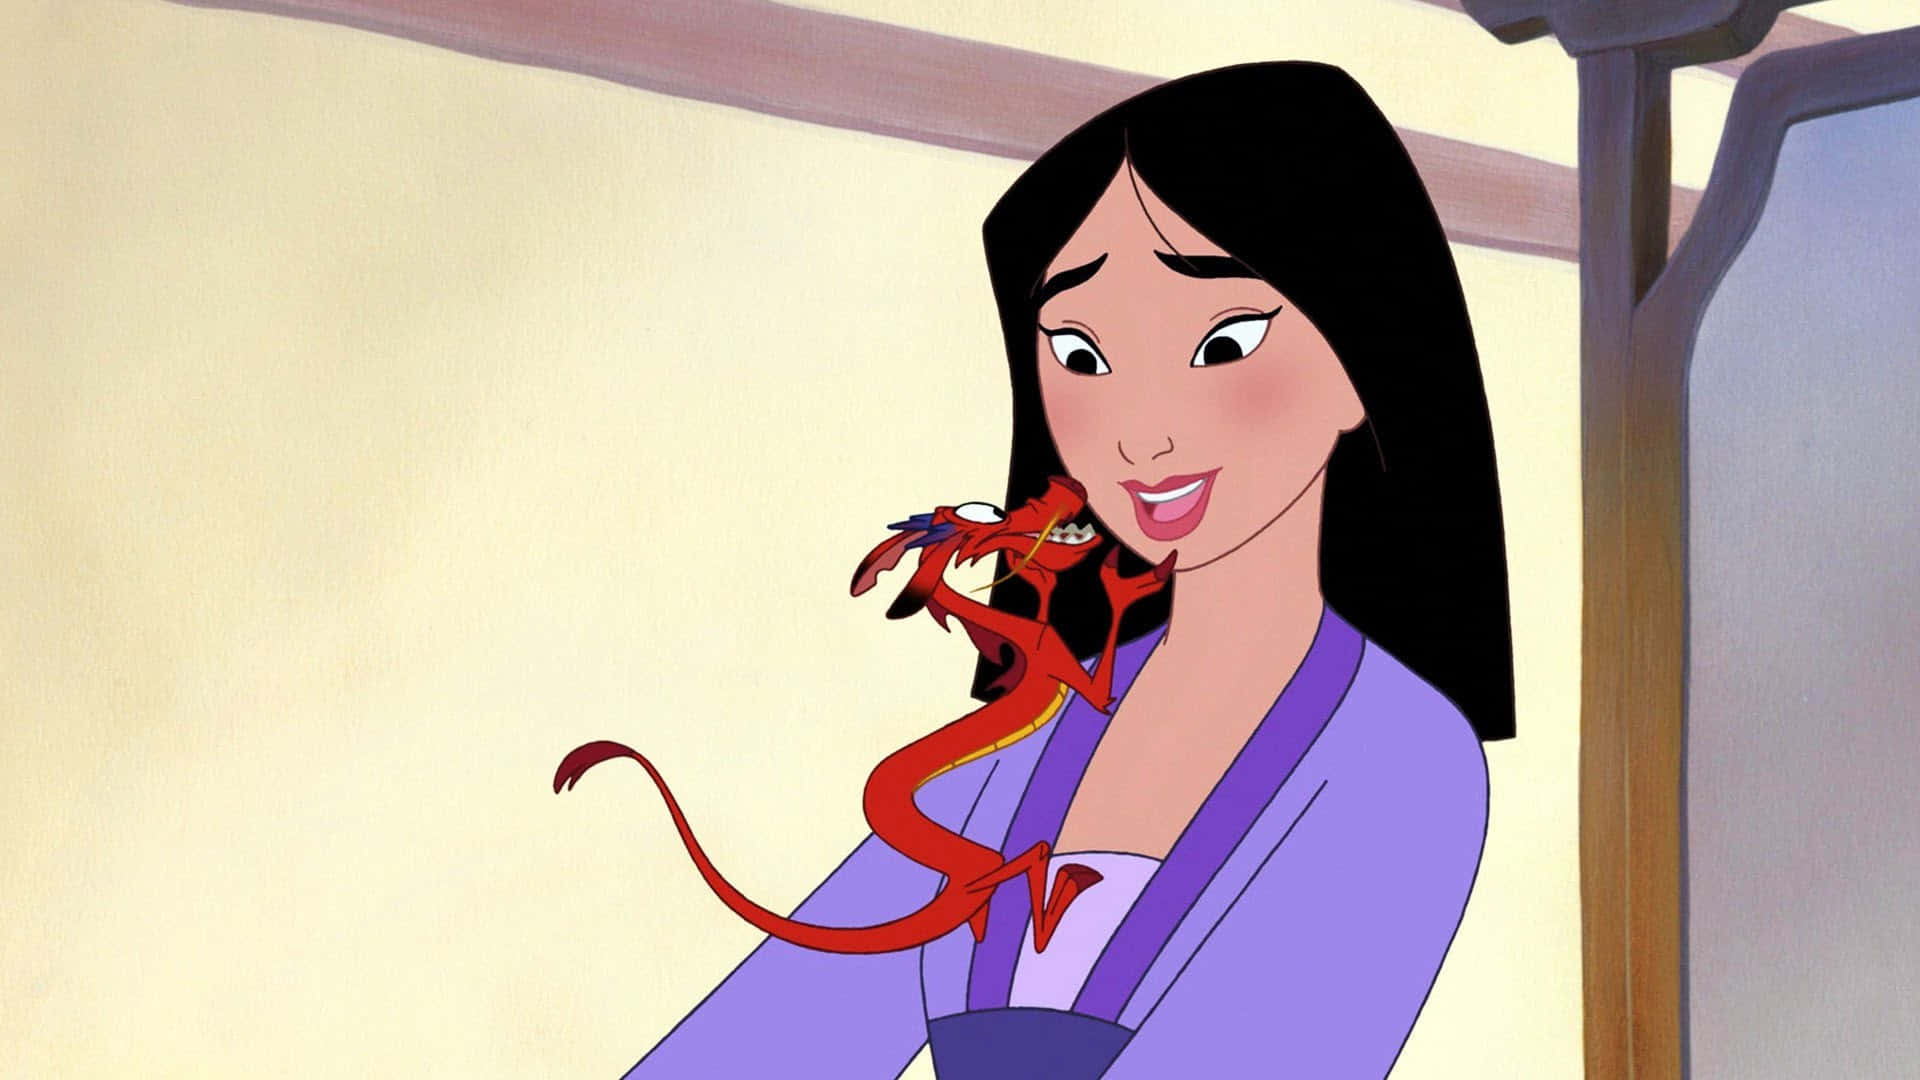 Disney's Mulan bringing honor to her family